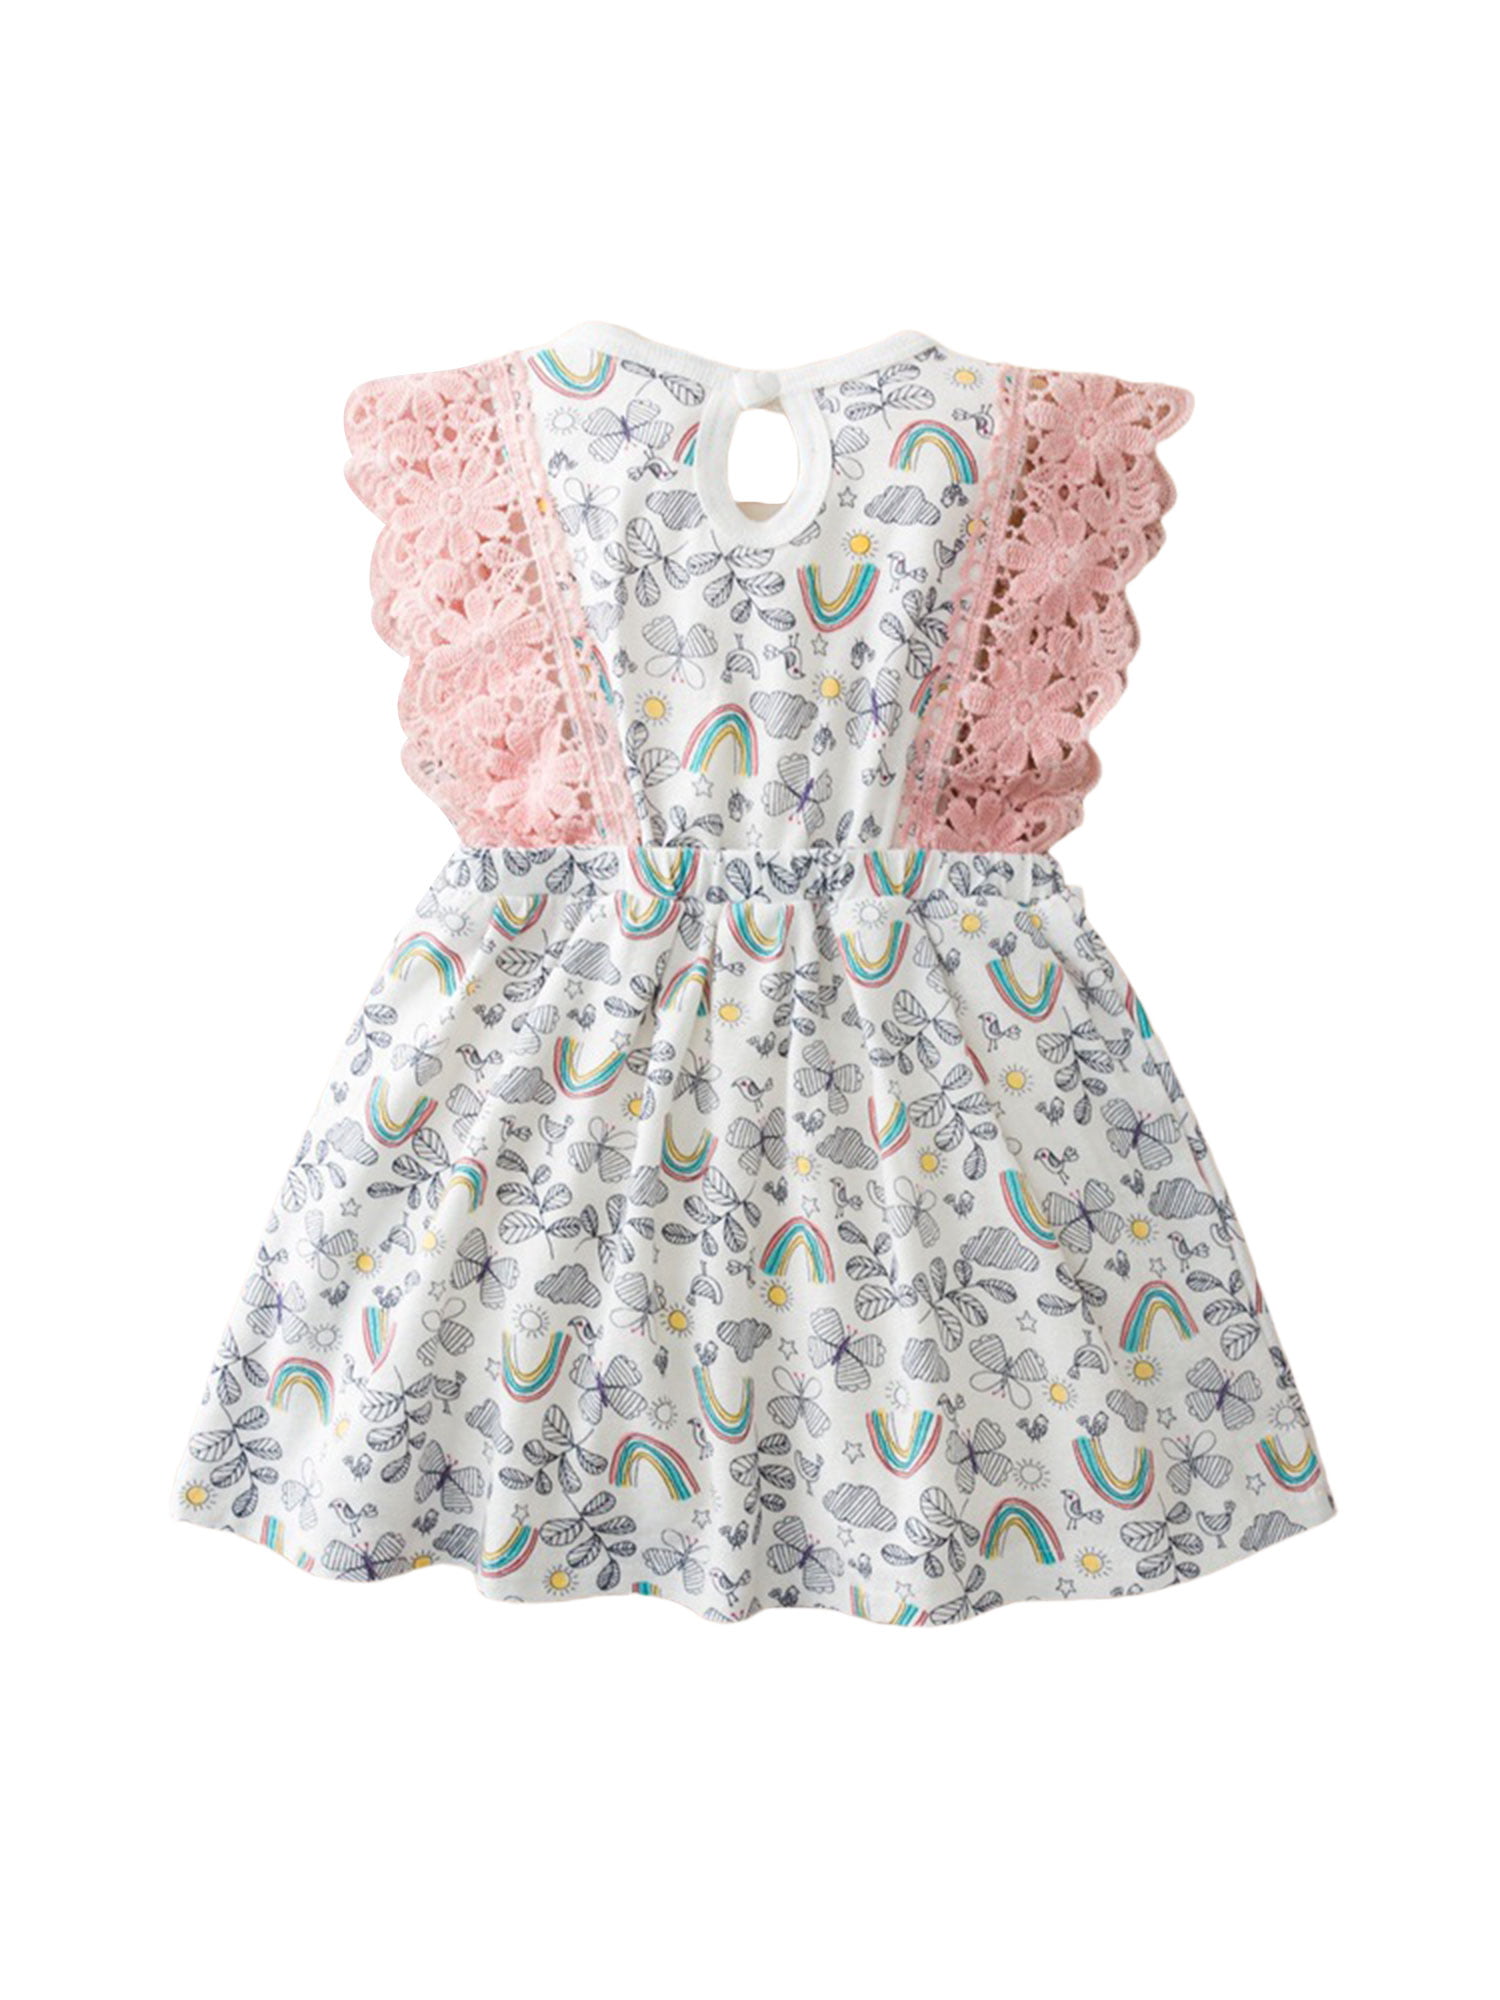 Loalirando Summer Toddler Baby Girls Ruffles Sleeve Flowers Print Bowknot A-line Sundress Tutu Skirts Party Dress One-Piece Outfits